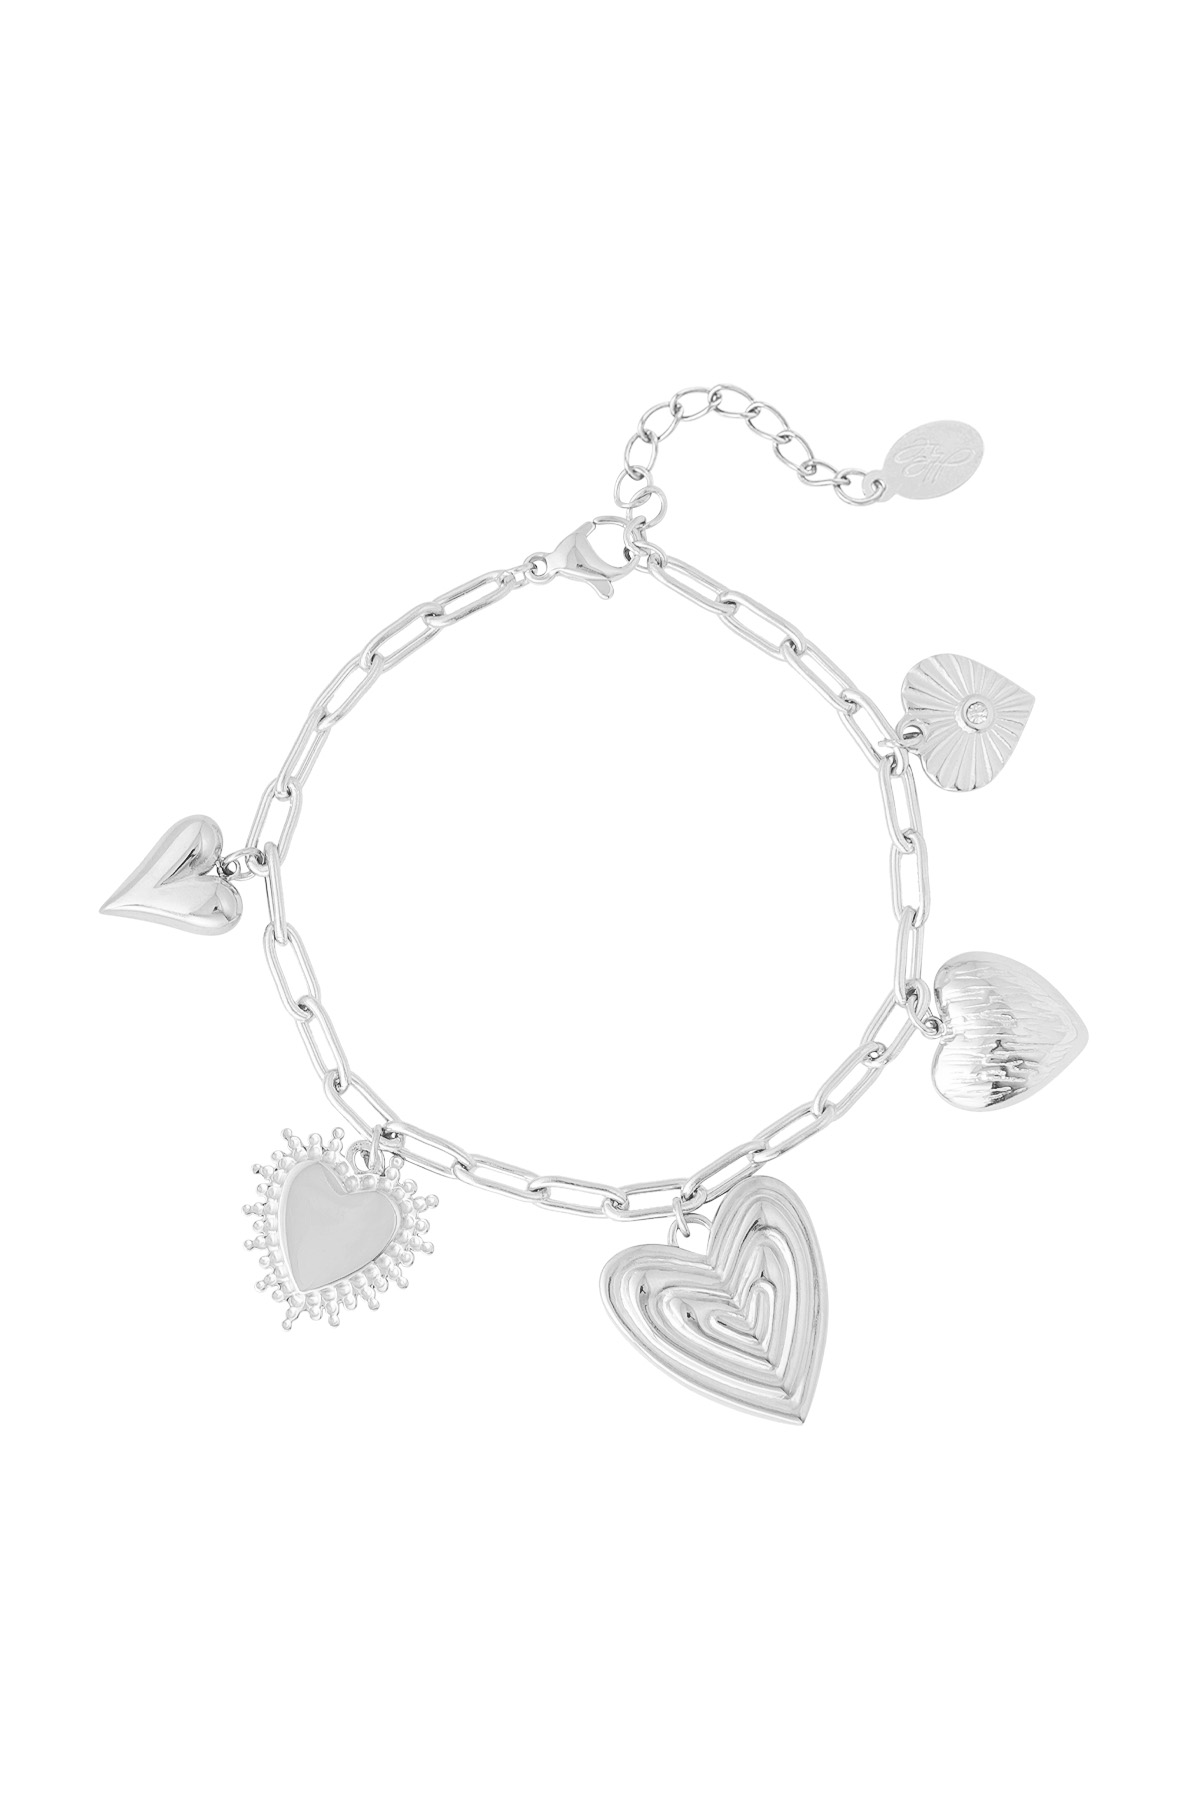 Charm bracelet flower love - silver h5 